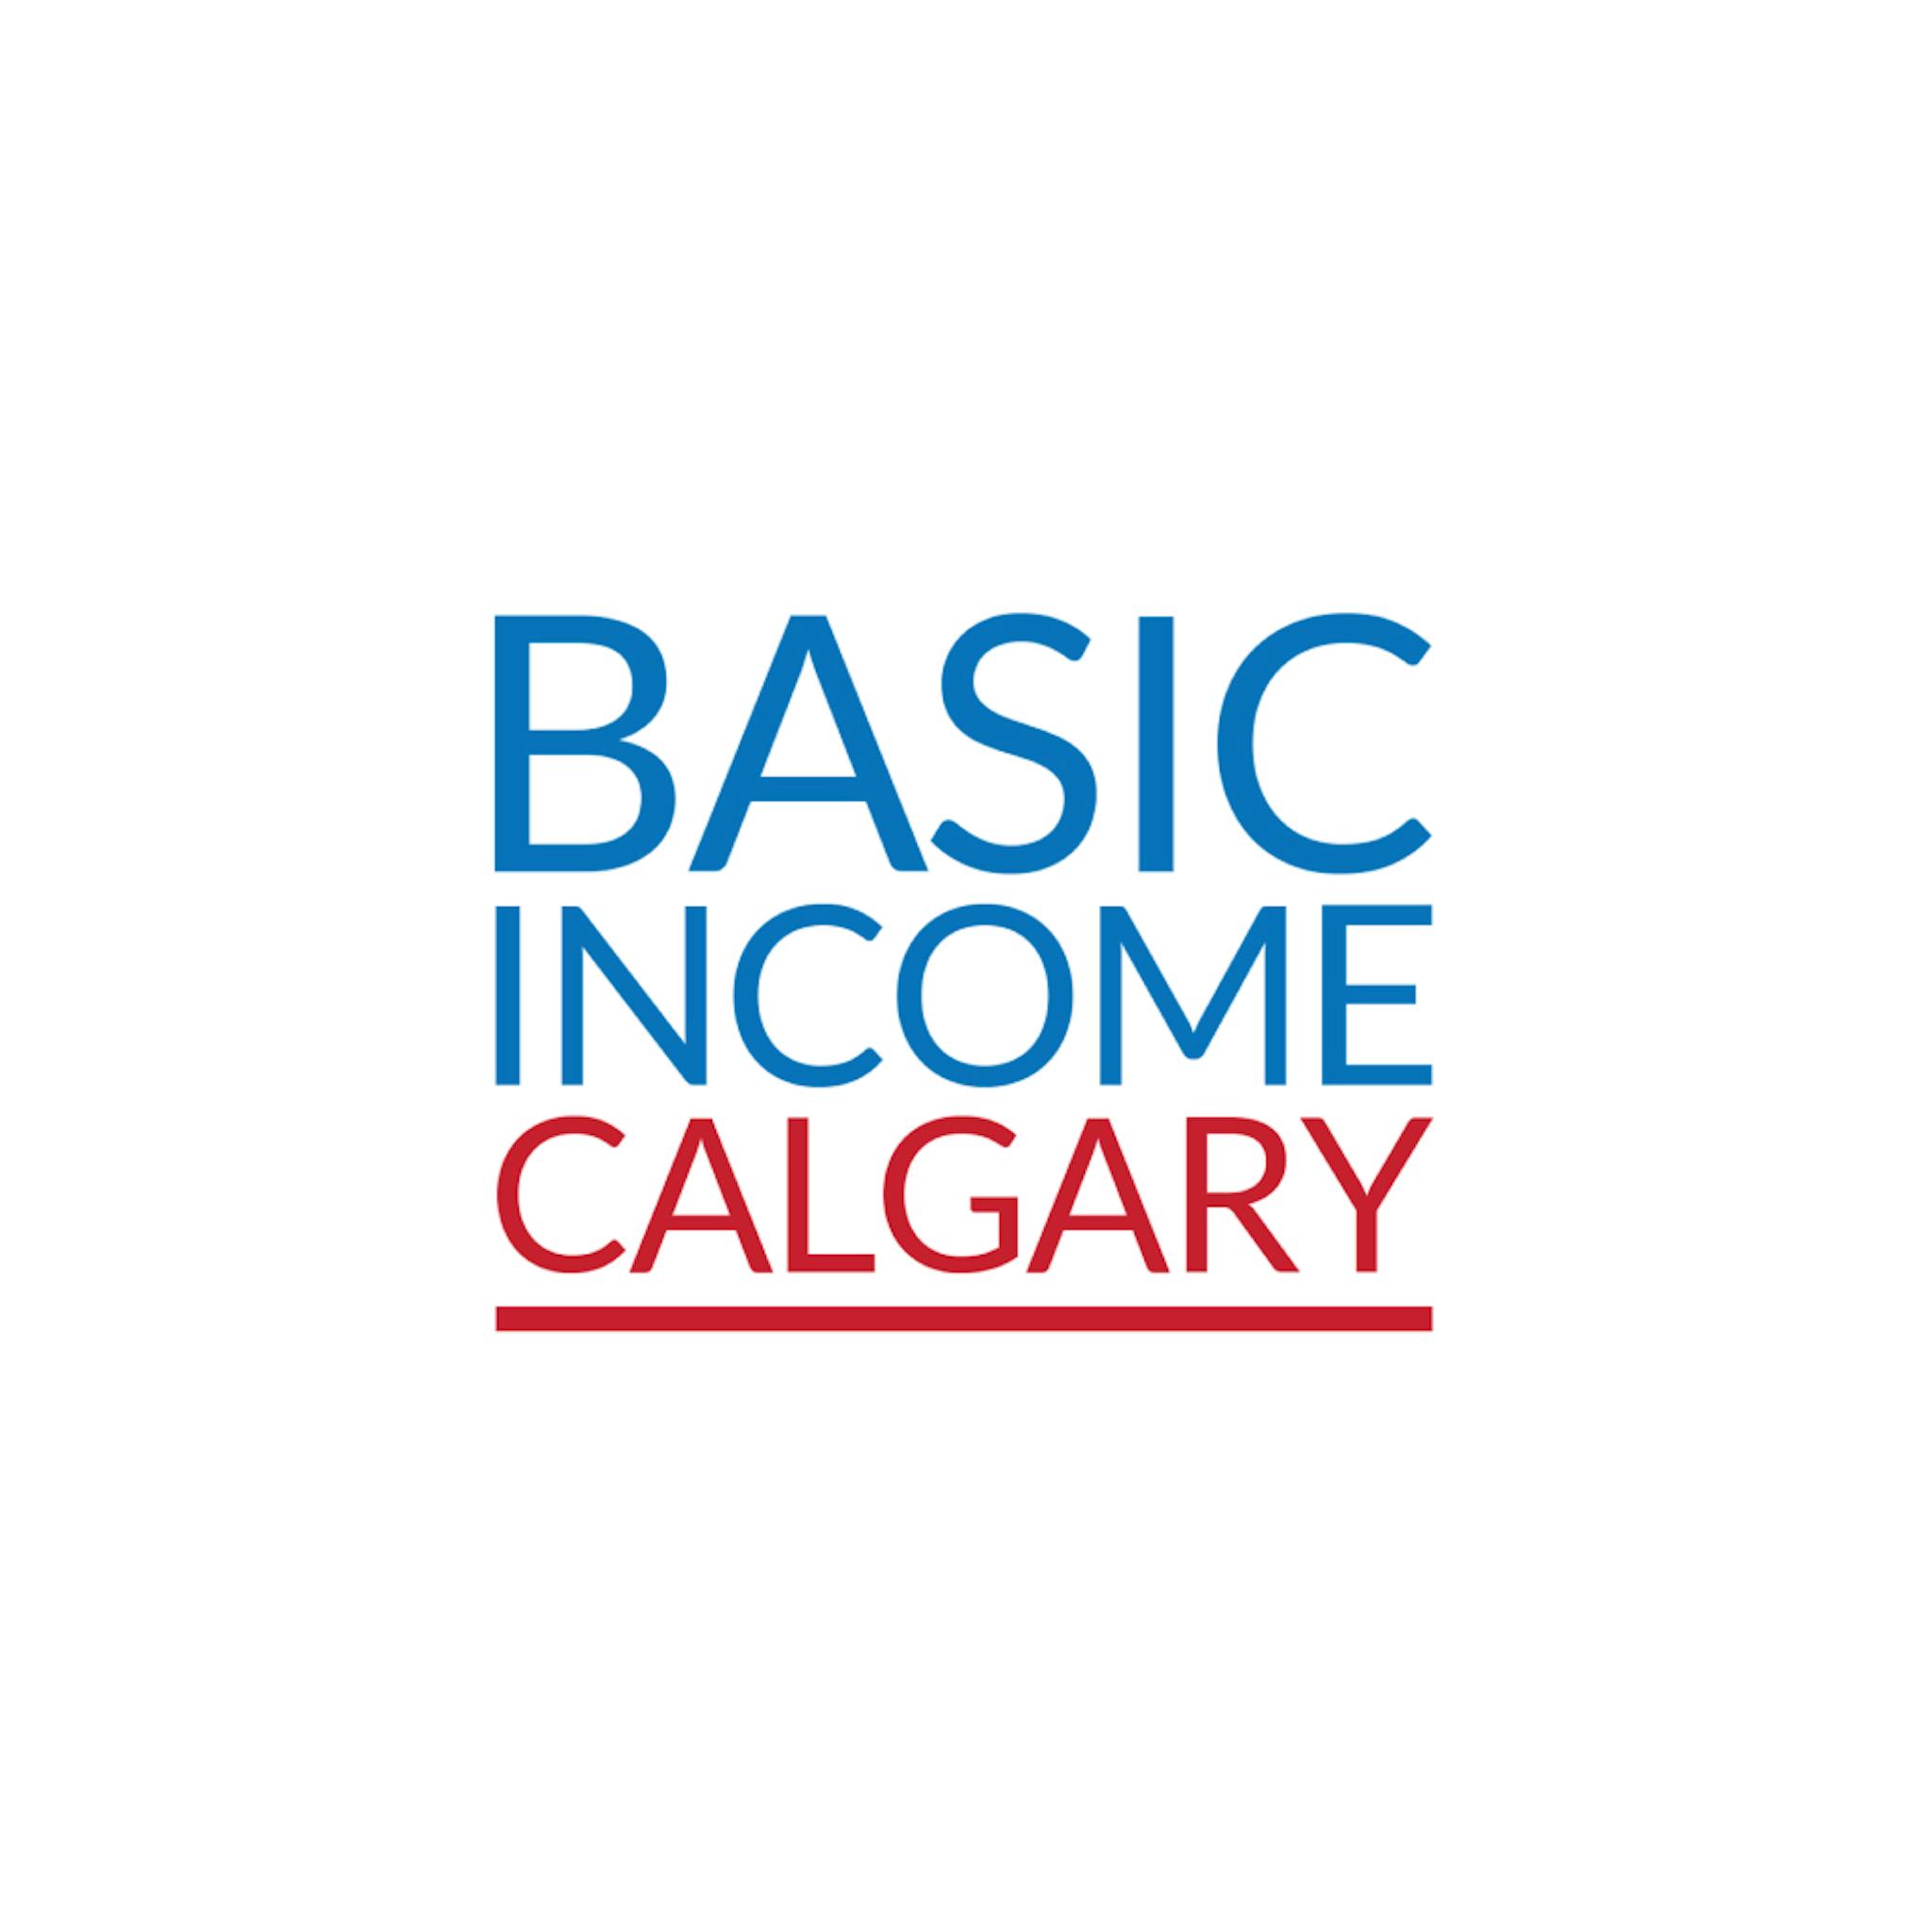 Basic Income Calgary logo